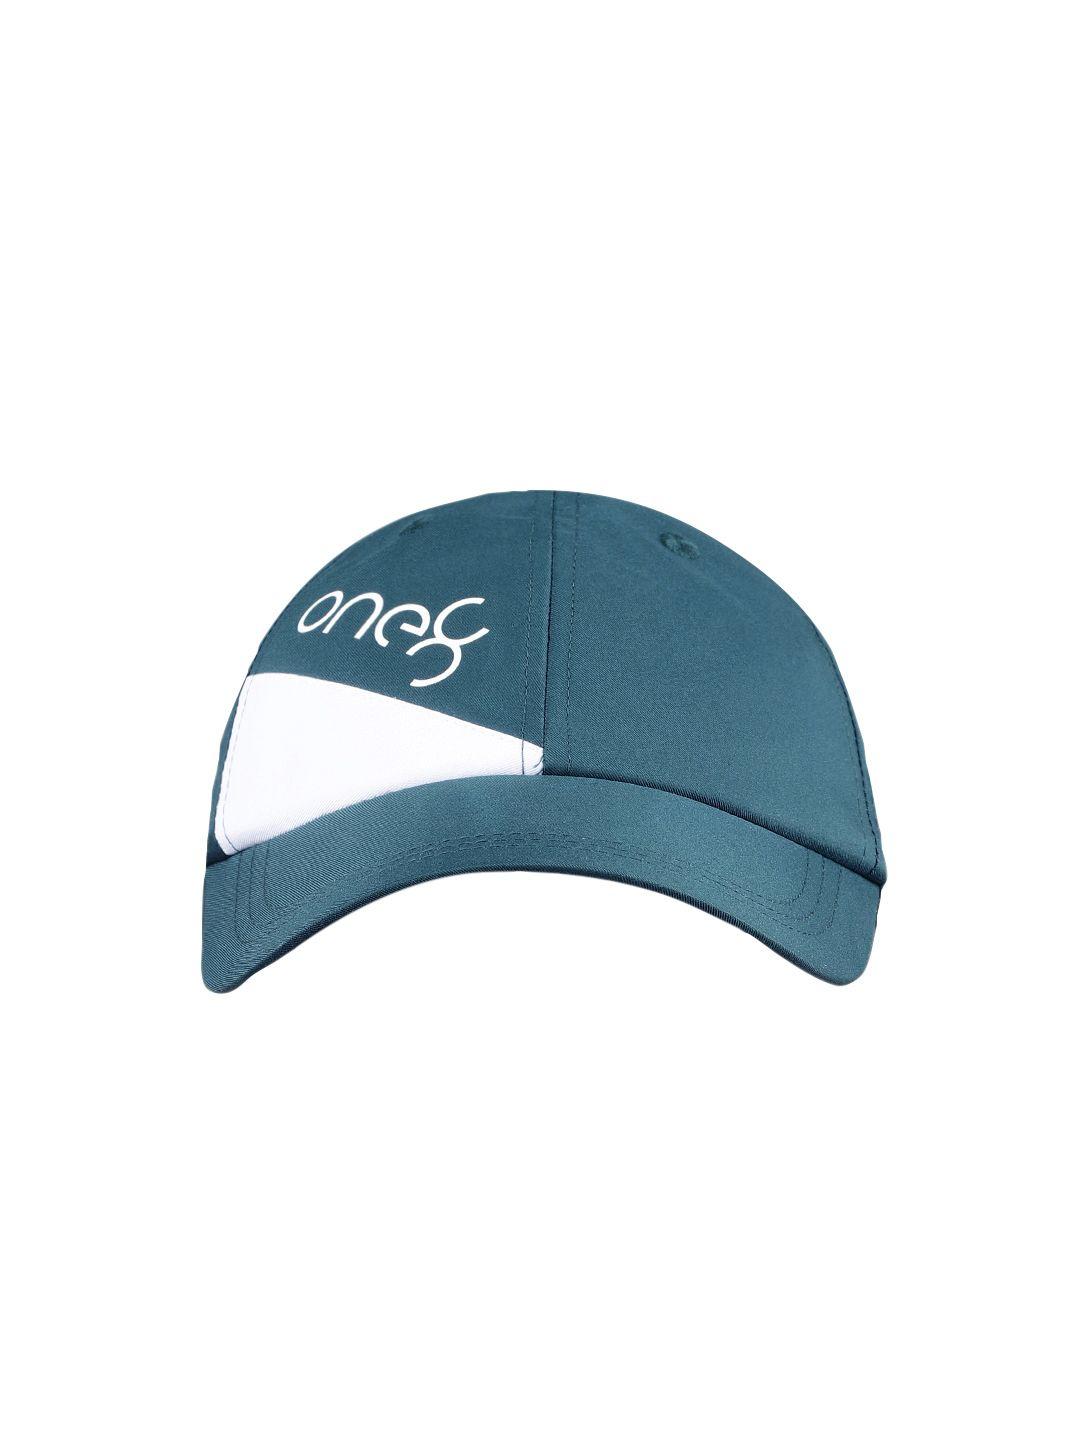 puma x one8 unisex teal printed baseball cap